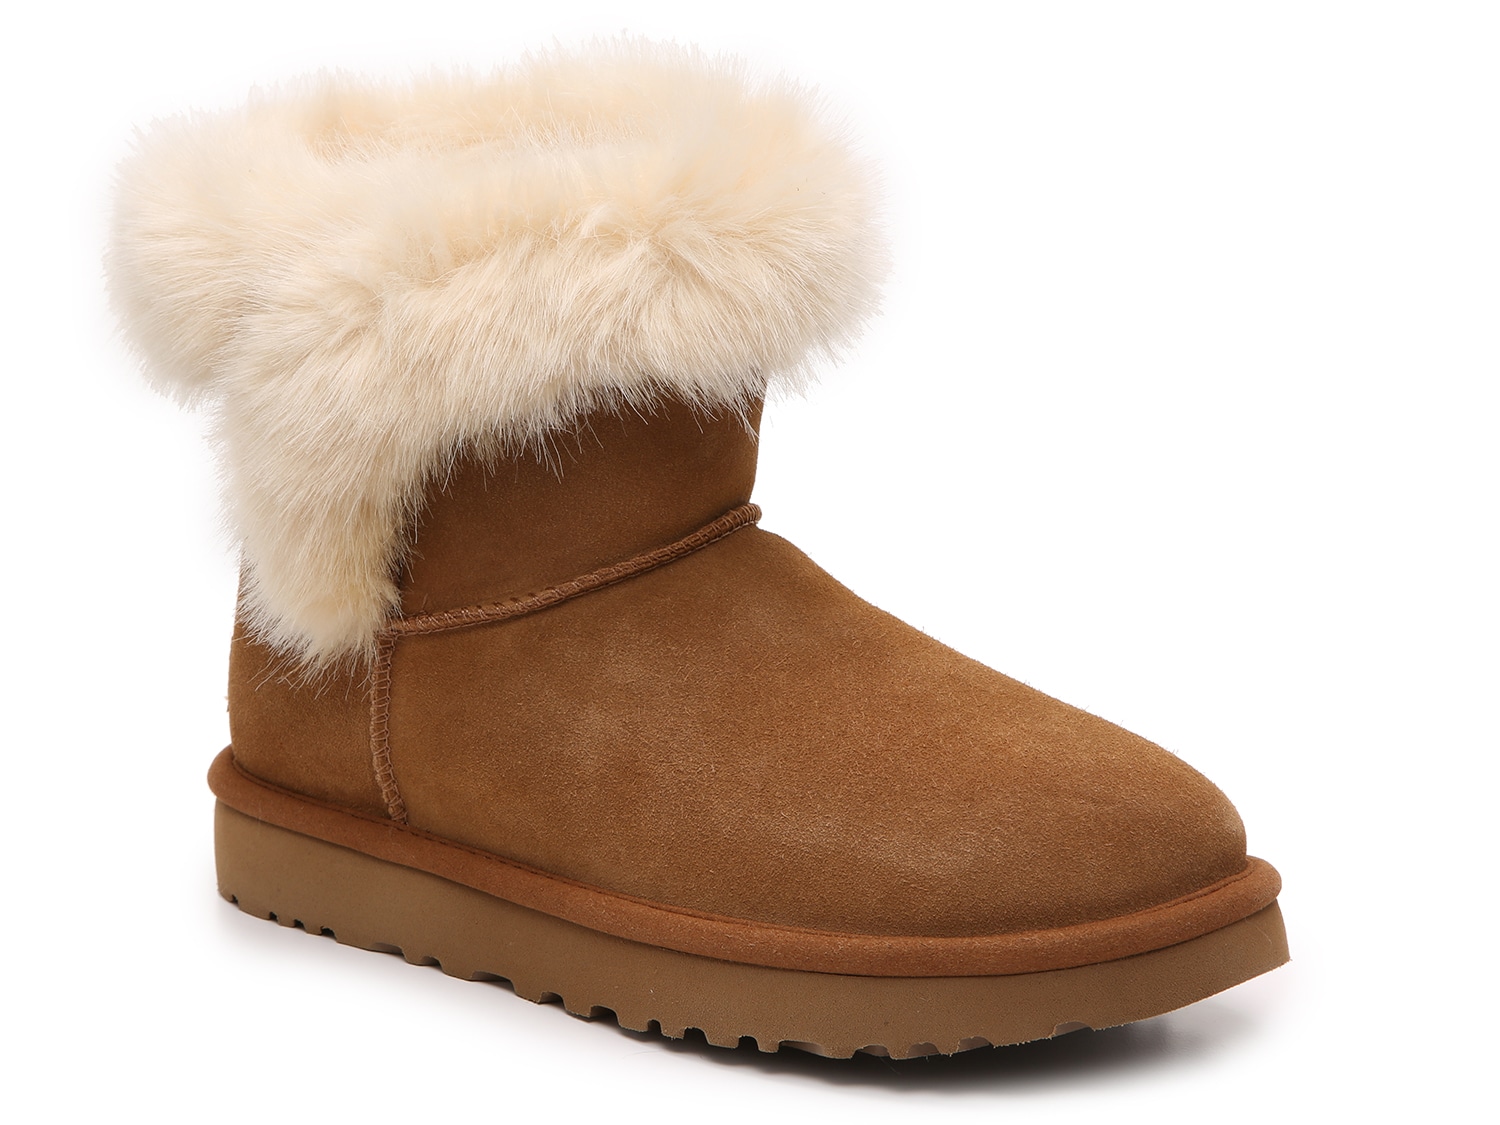 UGG Boots, Slippers \u0026 Sandals 